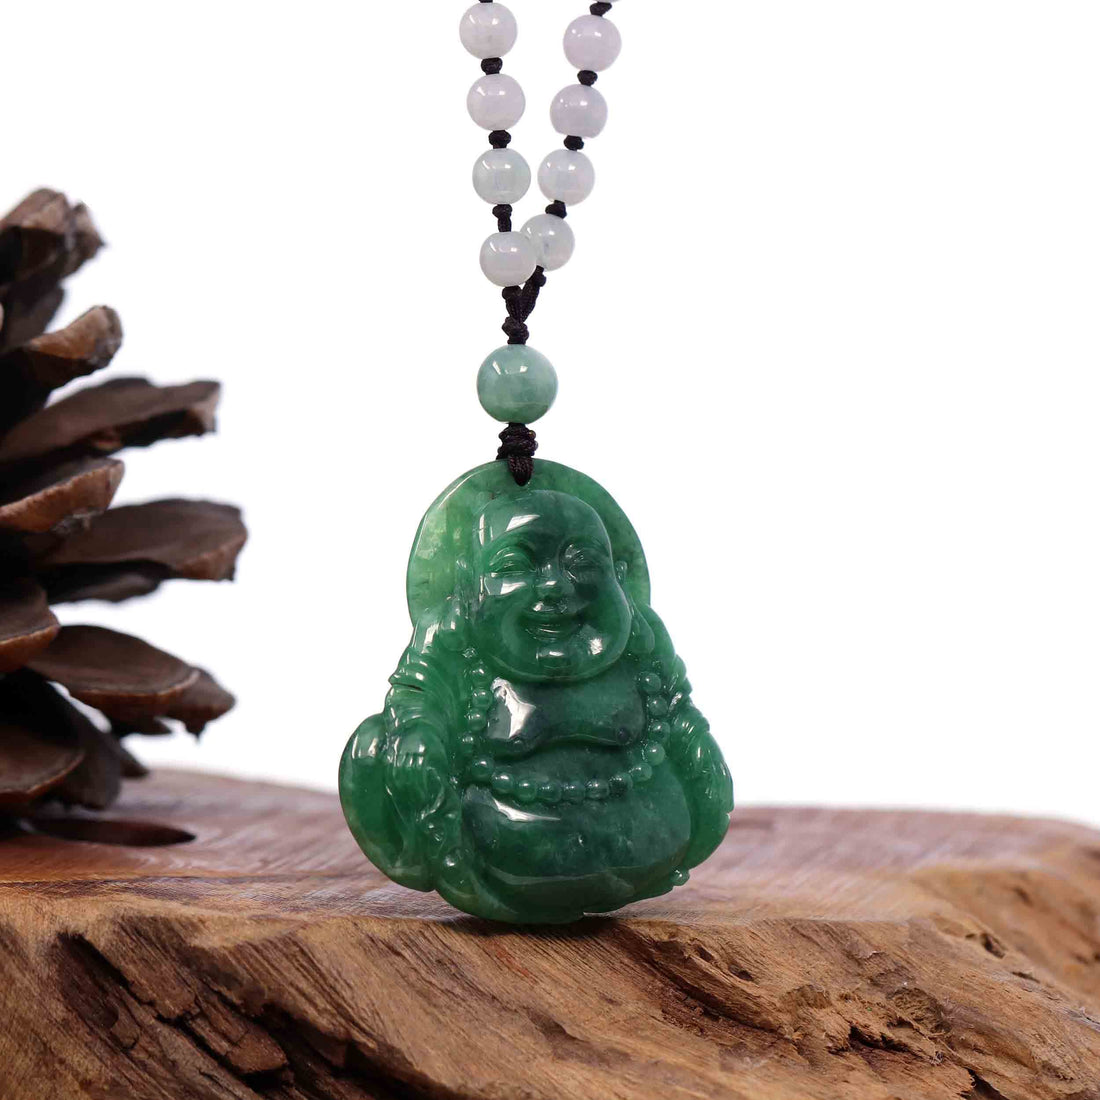 Baikalla Jewelry Jade Guanyin Pendant Necklace Baikalla "Goddess of Compassion" Genuine Burmese Jadeite Jade Happy Buddha Pendant